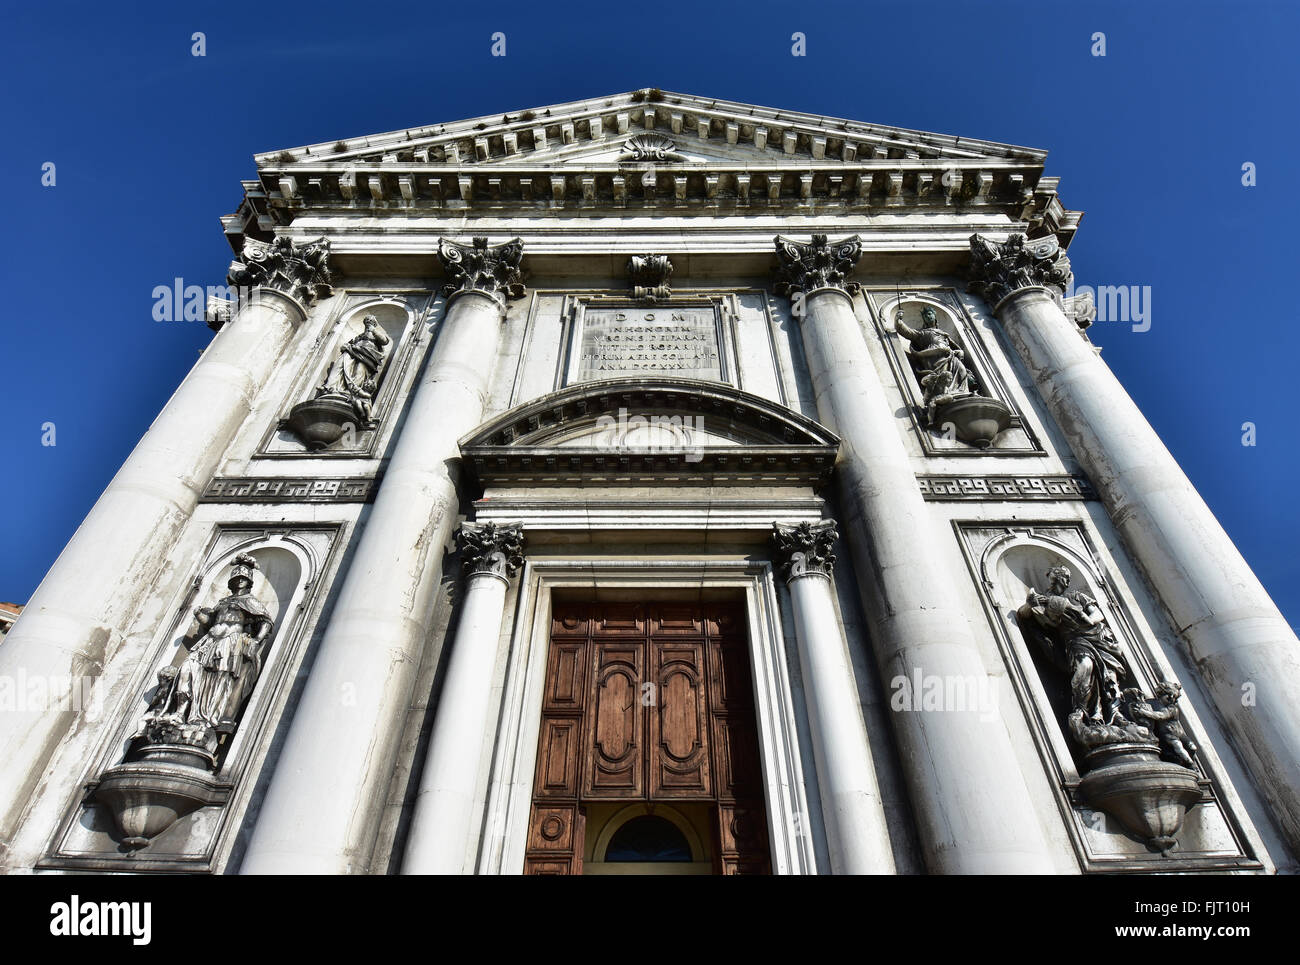 Gesuati dominican church imposing neoclassical facade Stock Photo